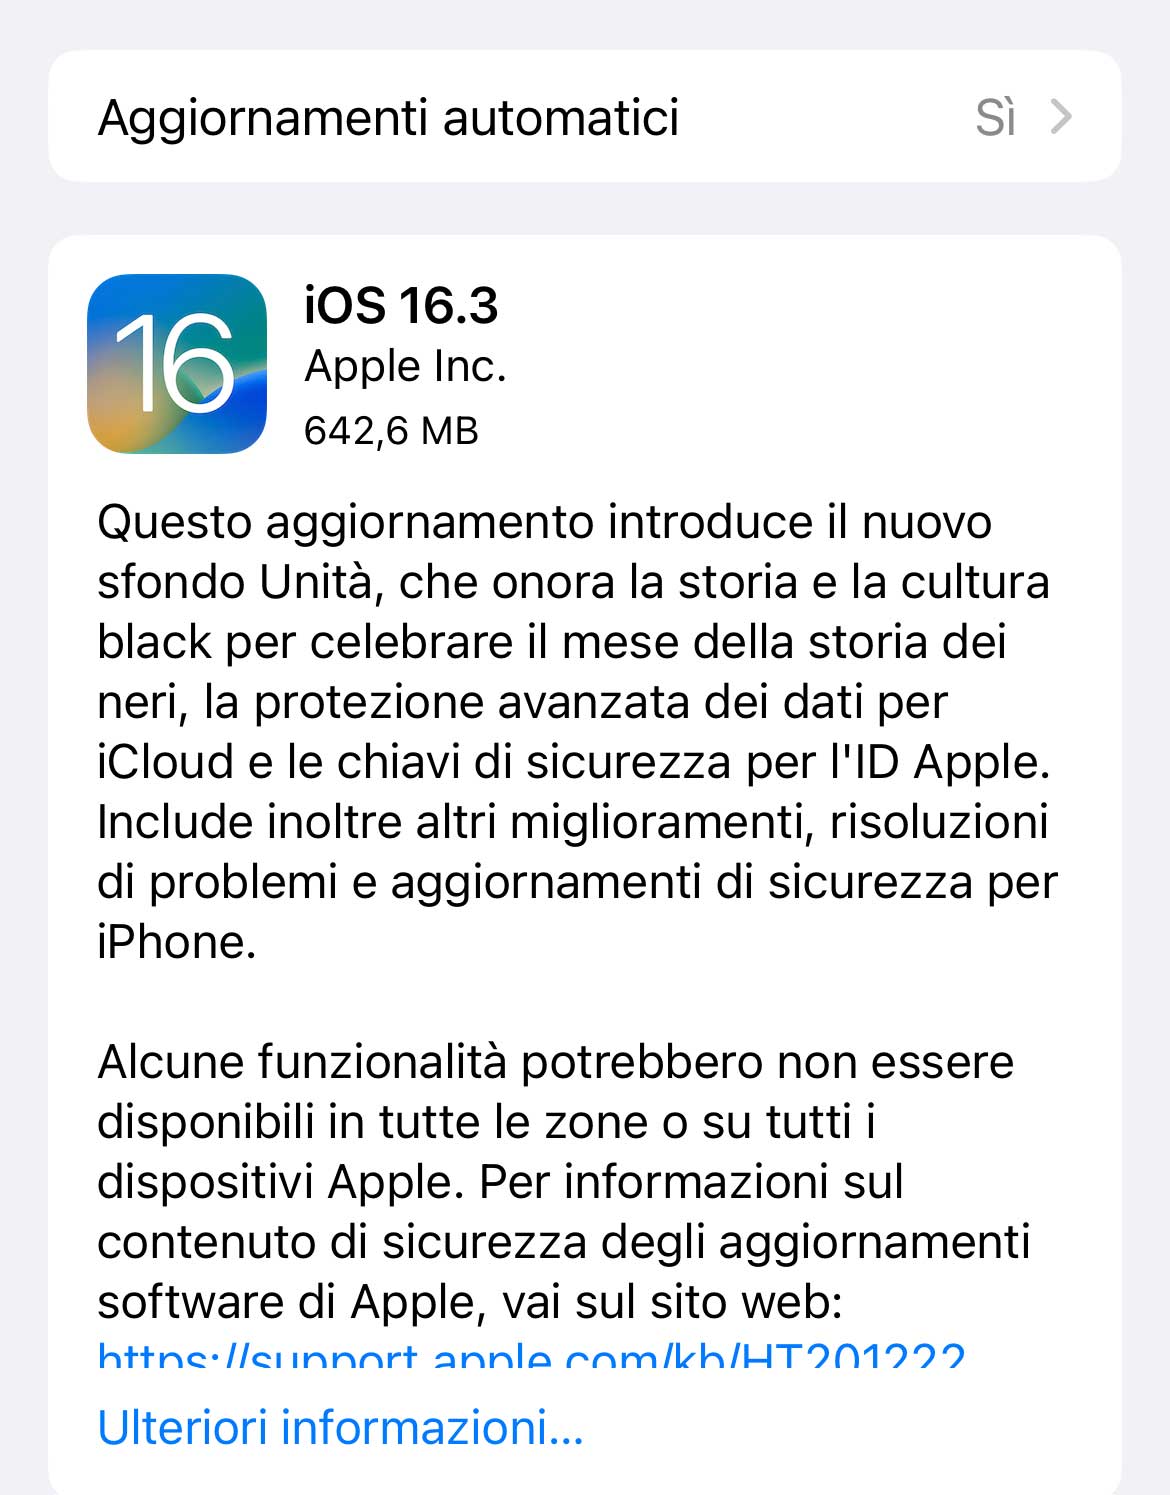 Disponibile aggiornamento a iOS 16.3 e iPadOS 16.3